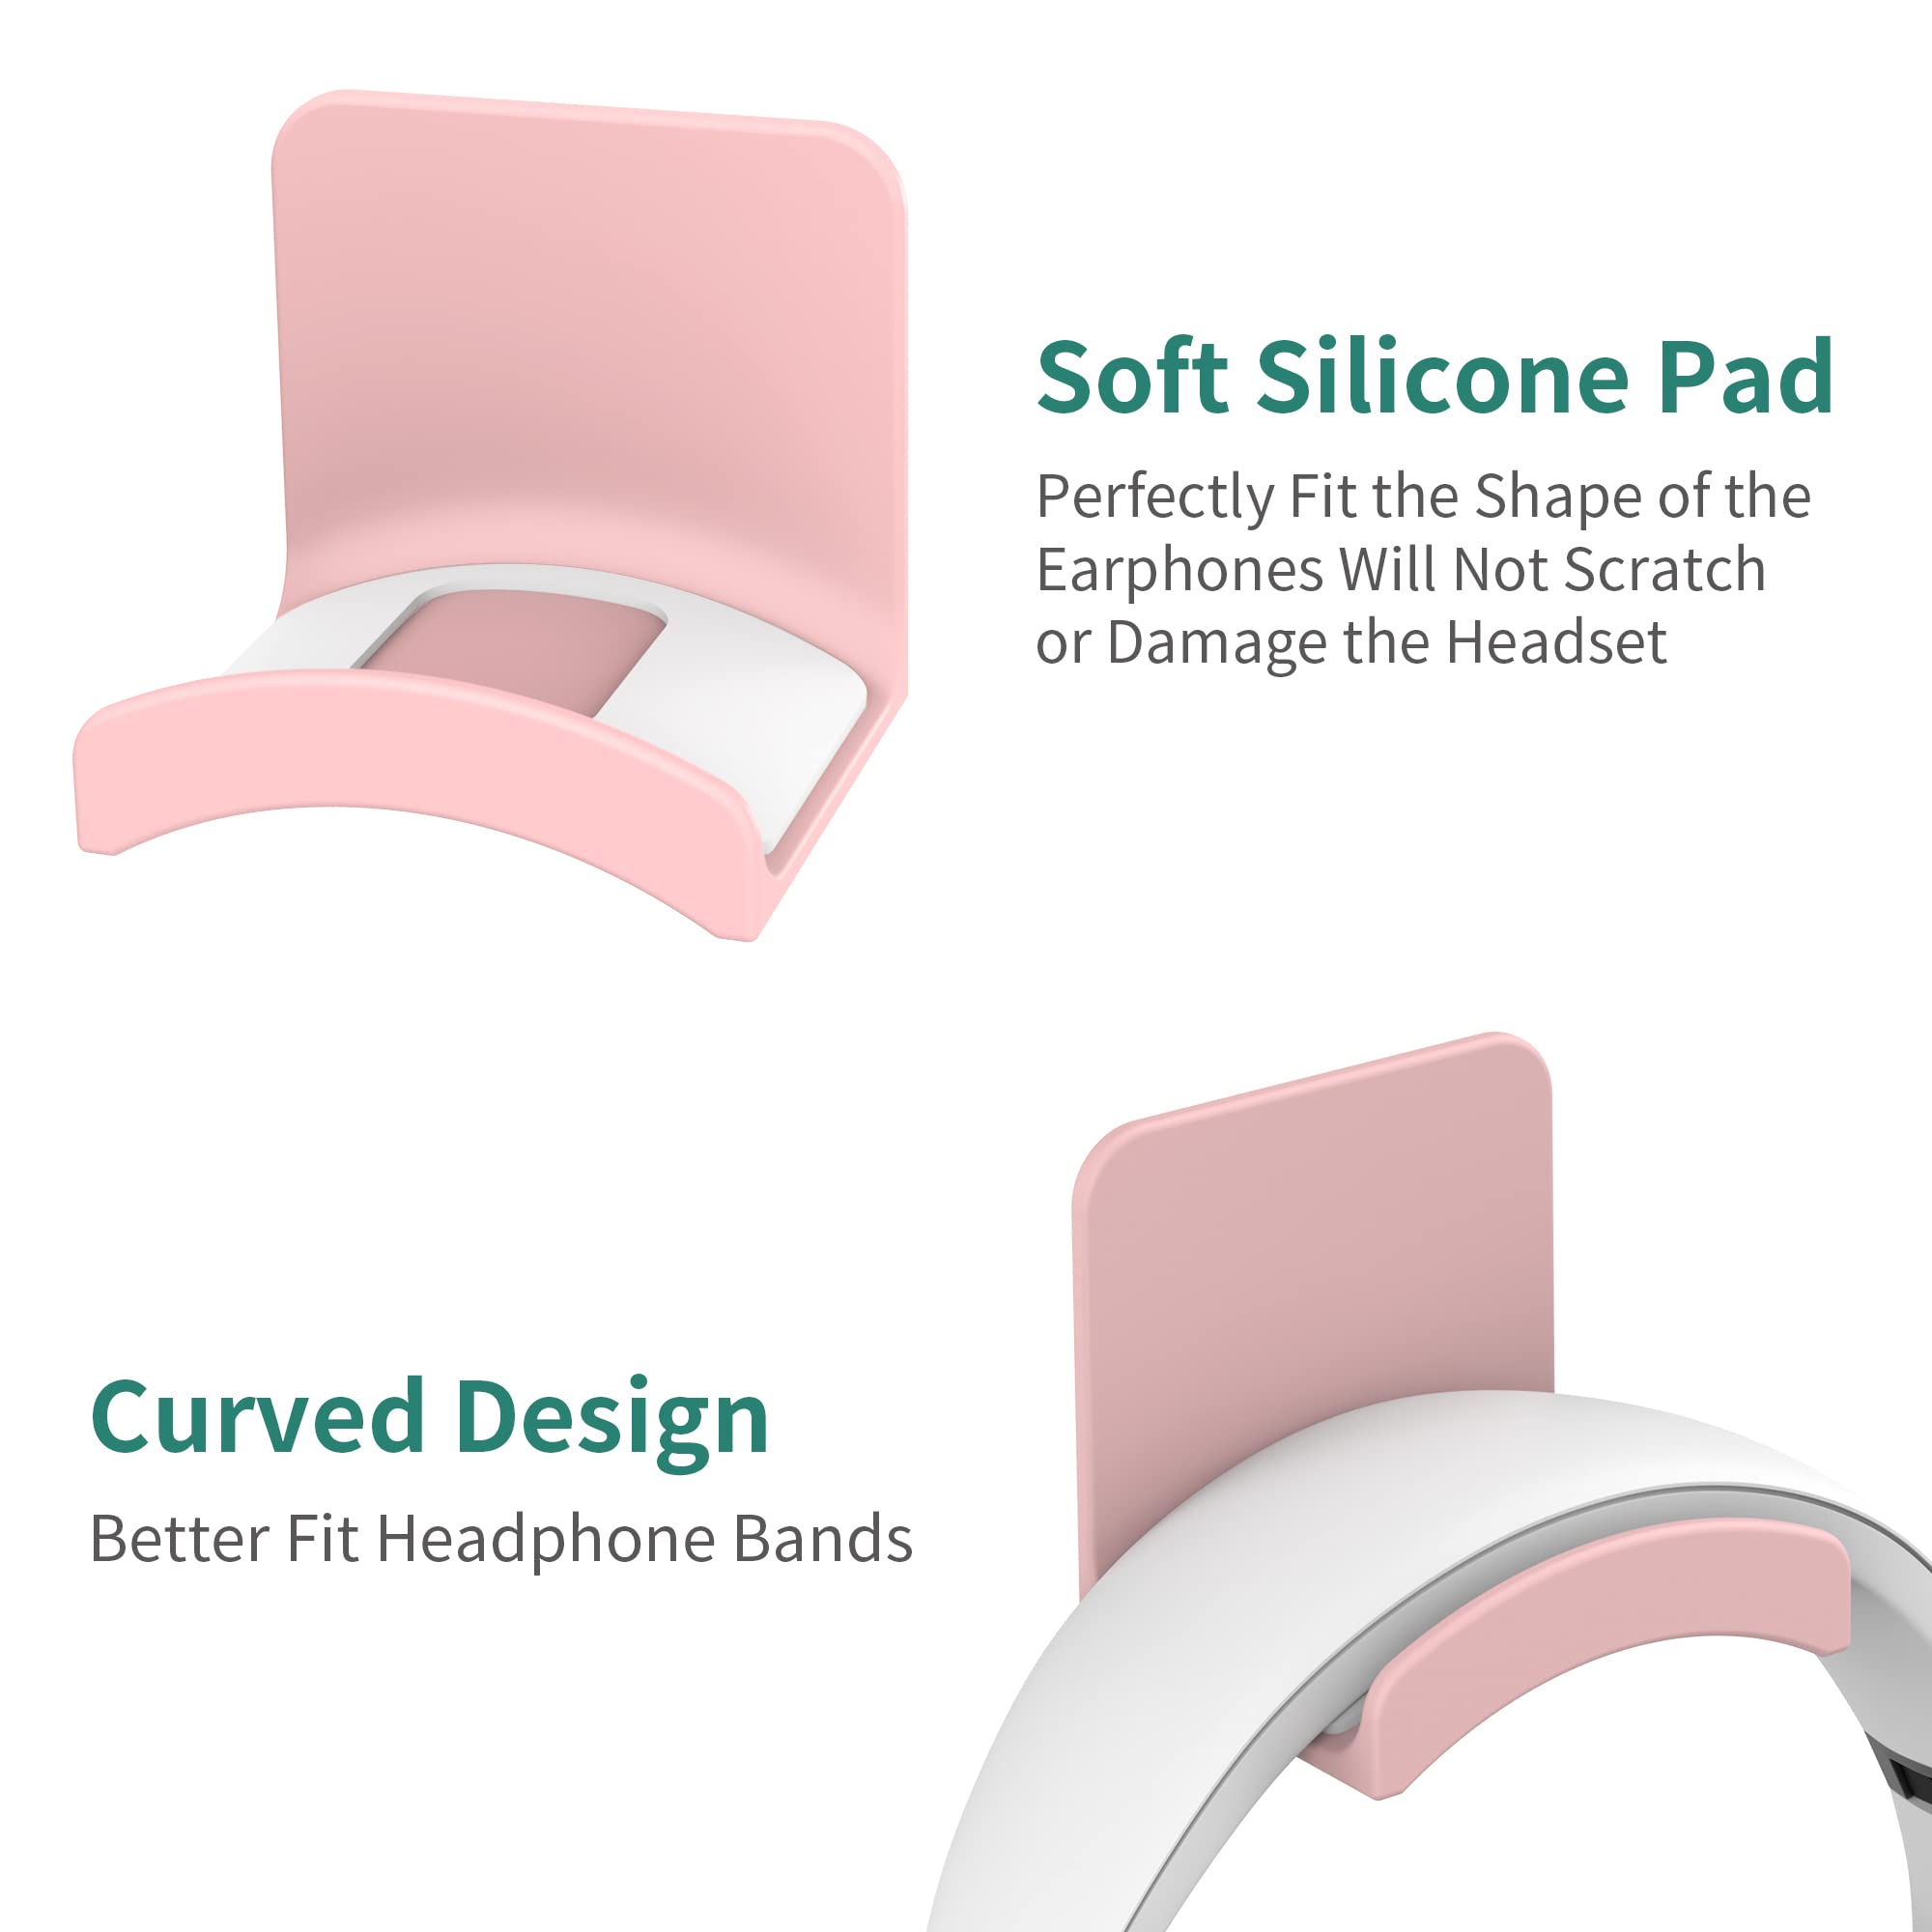 HomeMount Headphone Stand Headset Holder - Adhesive Gaming Headphone Hanger Hook Desk Mount for Most Headphone & Controller (Pink)